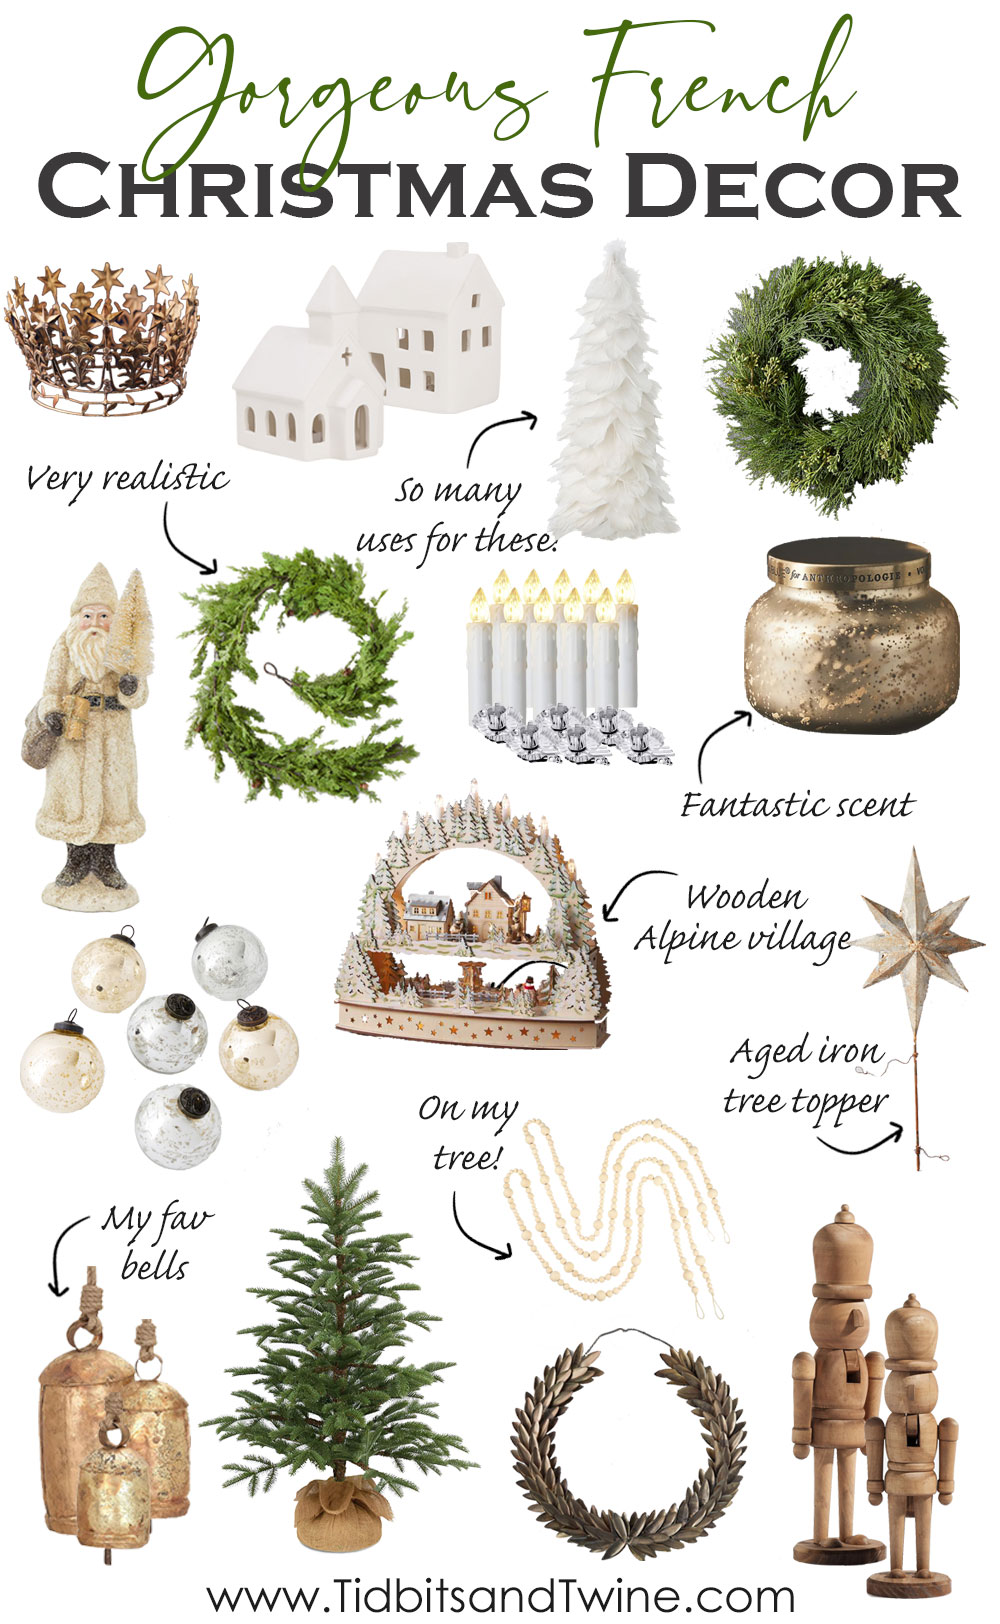 Gorgeous French Christmas Decor items